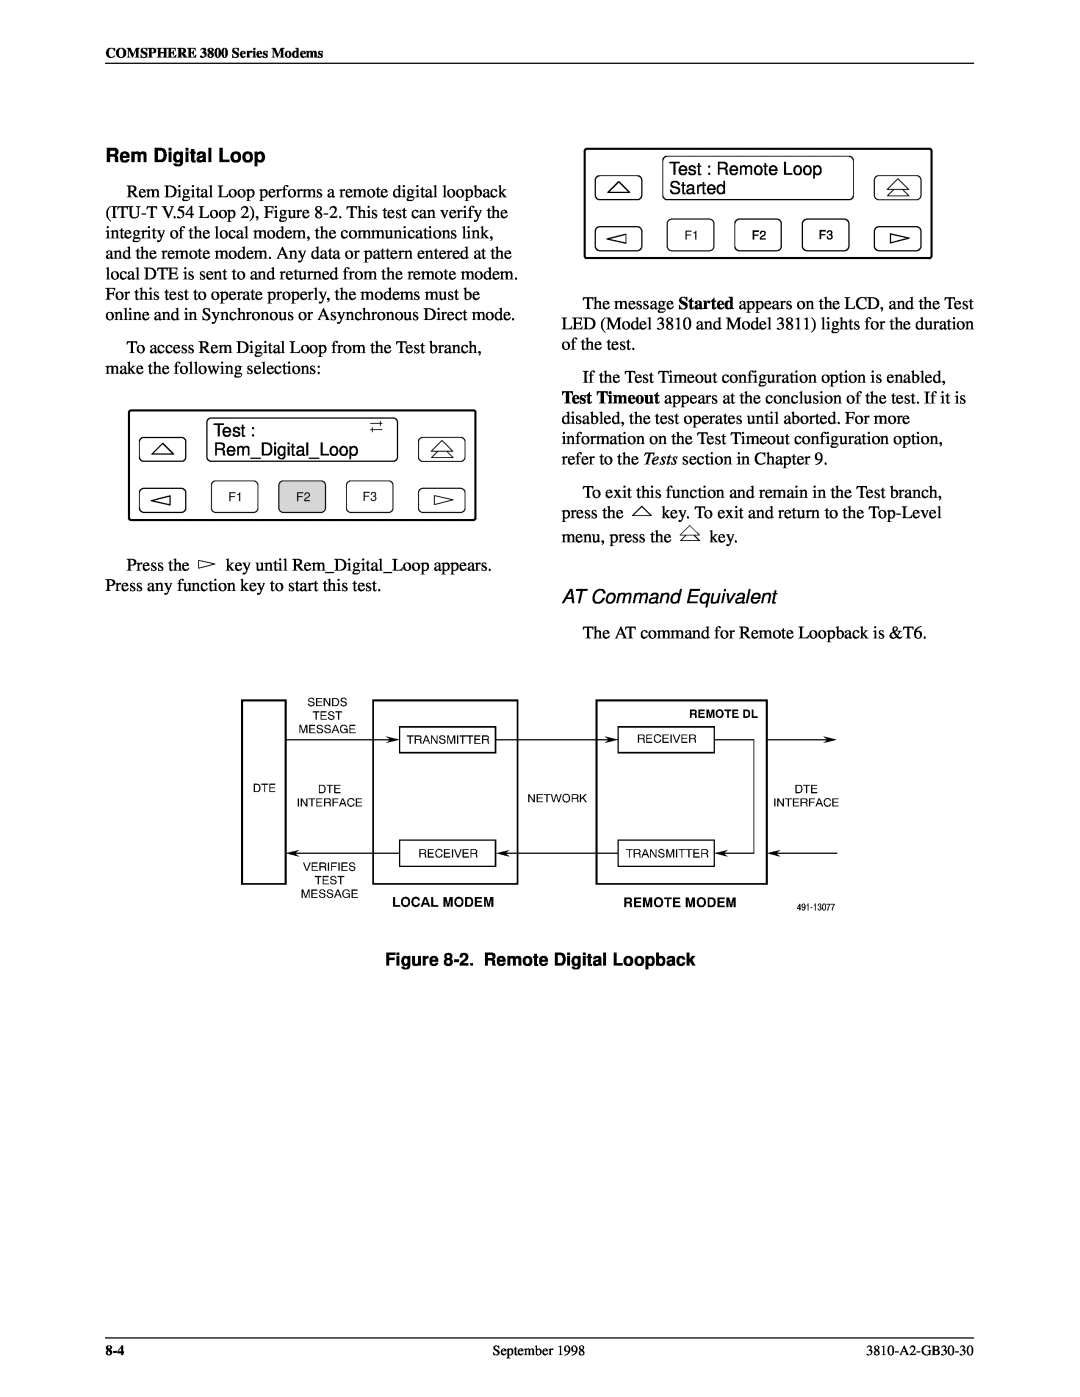 Paradyne 3800 manual Rem Digital Loop, 2. Remote Digital Loopback, AT Command Equivalent 